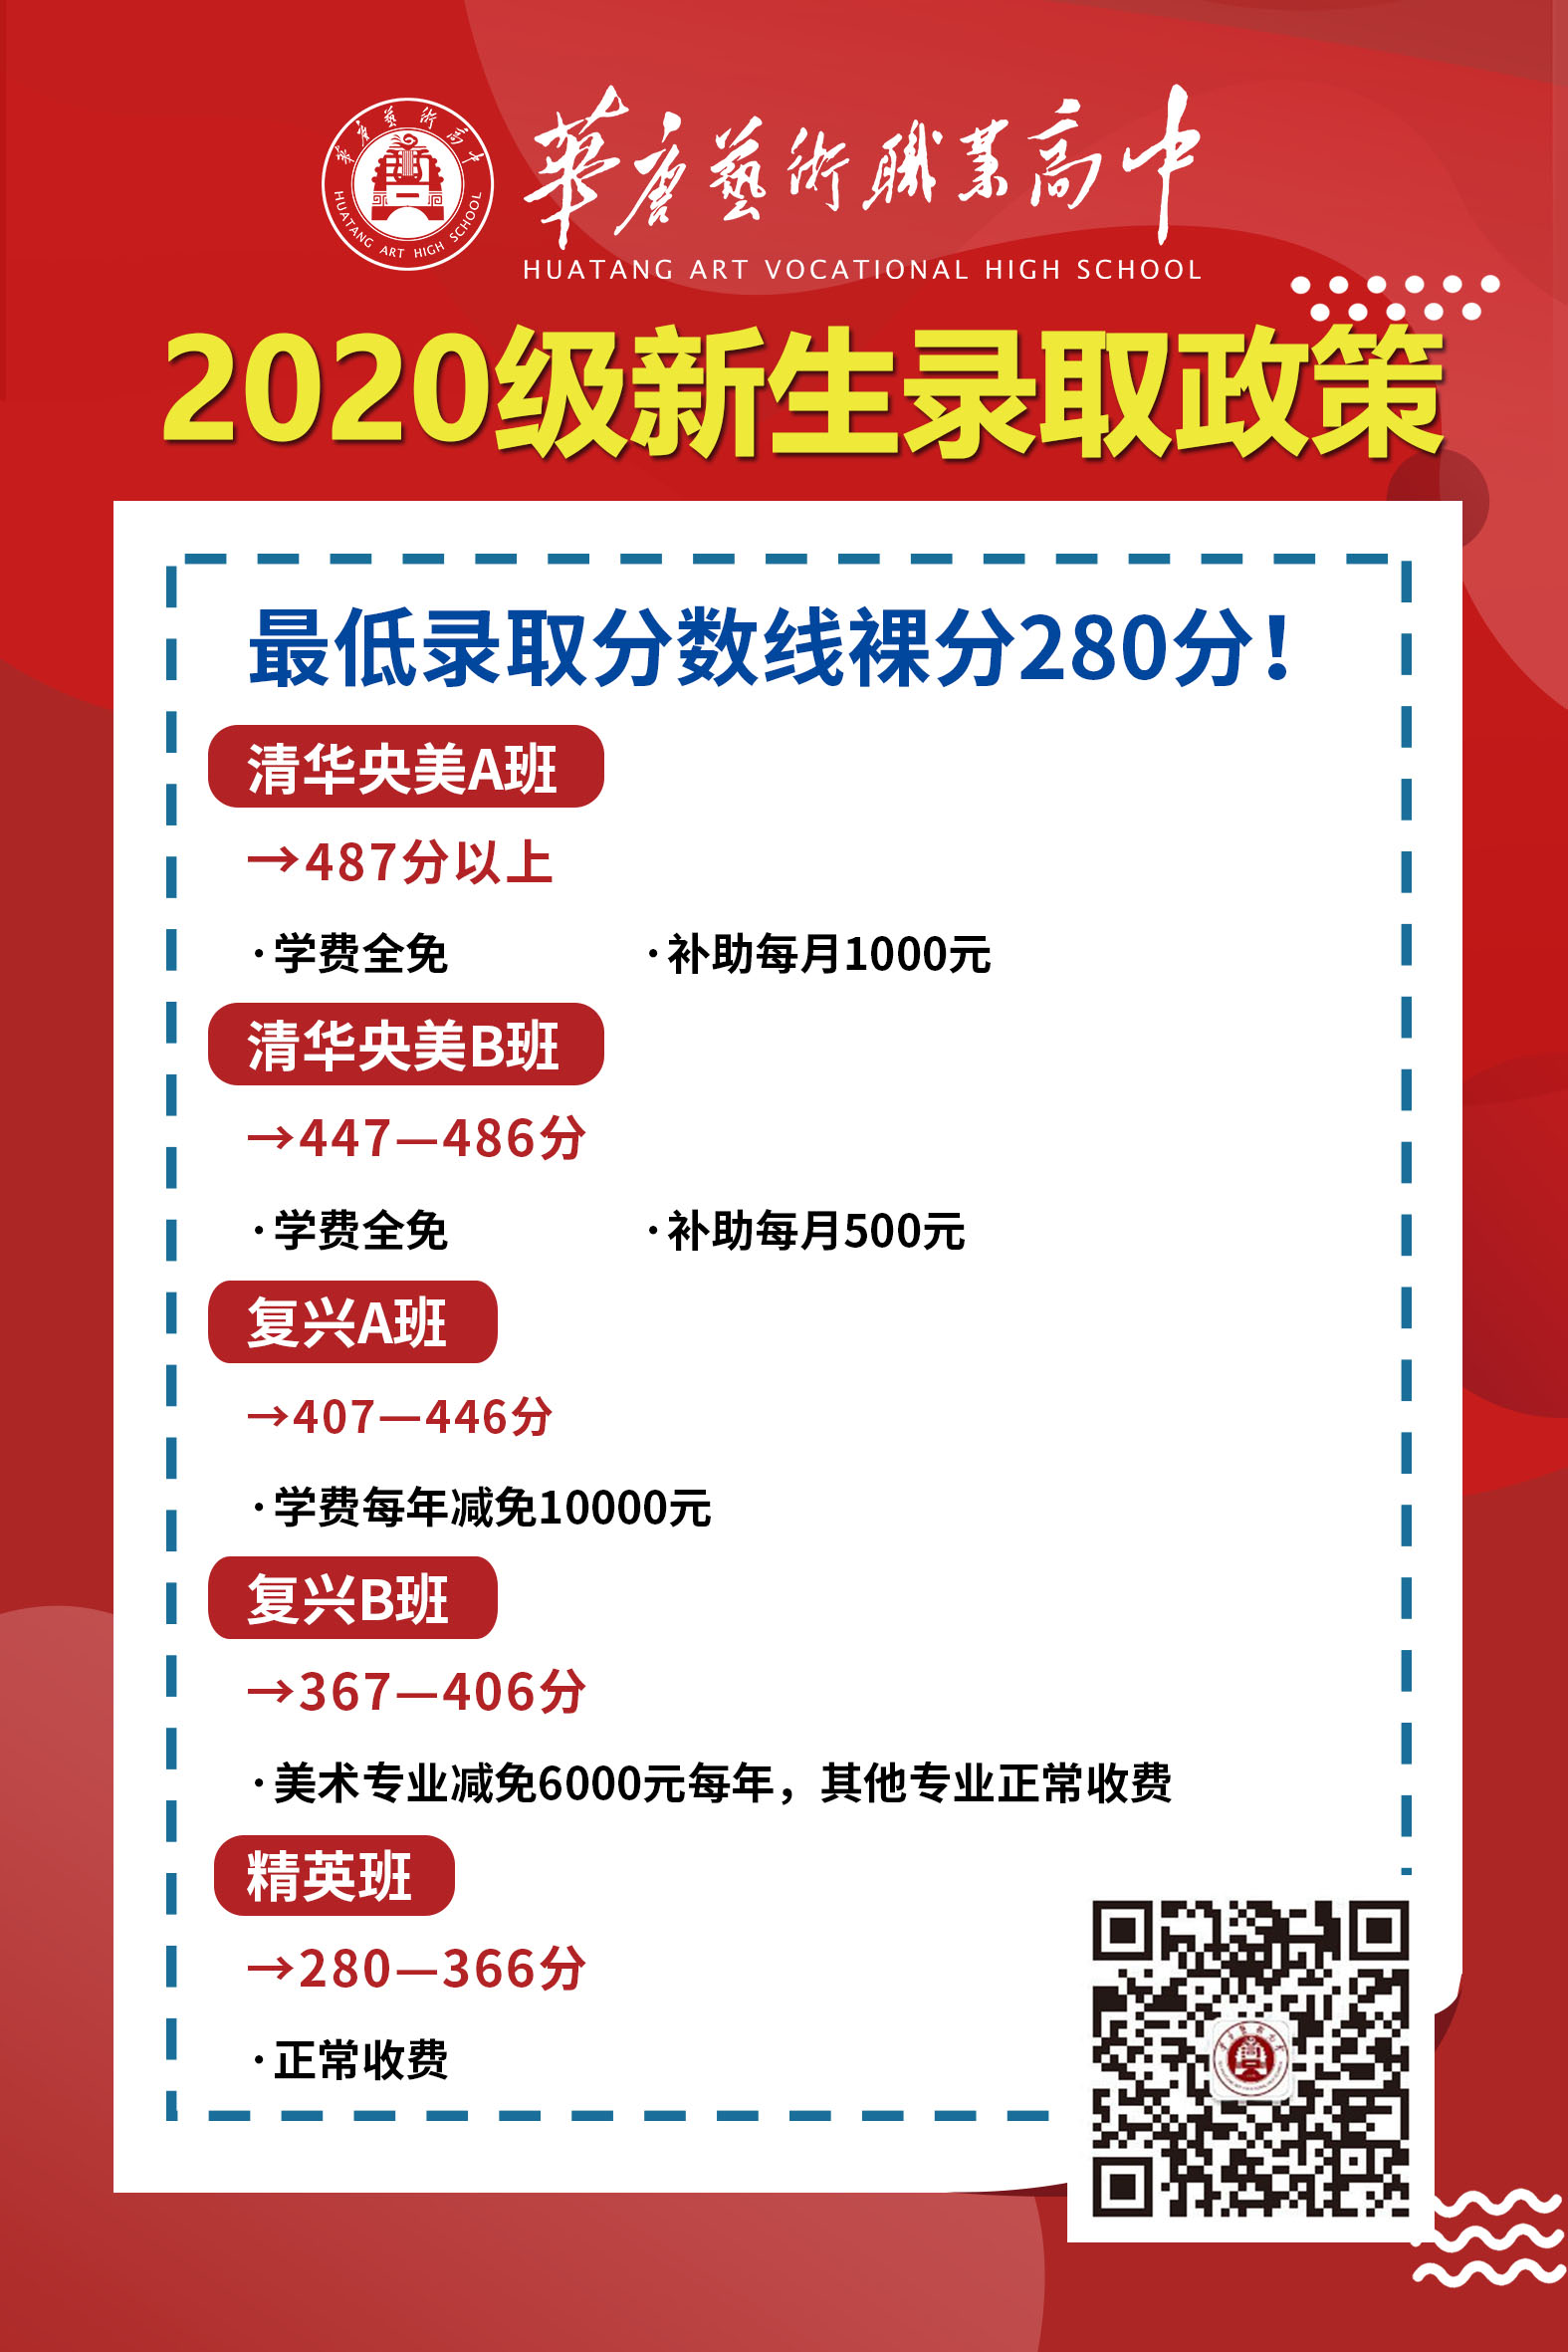 2020年华唐艺术高中中考录取分数线